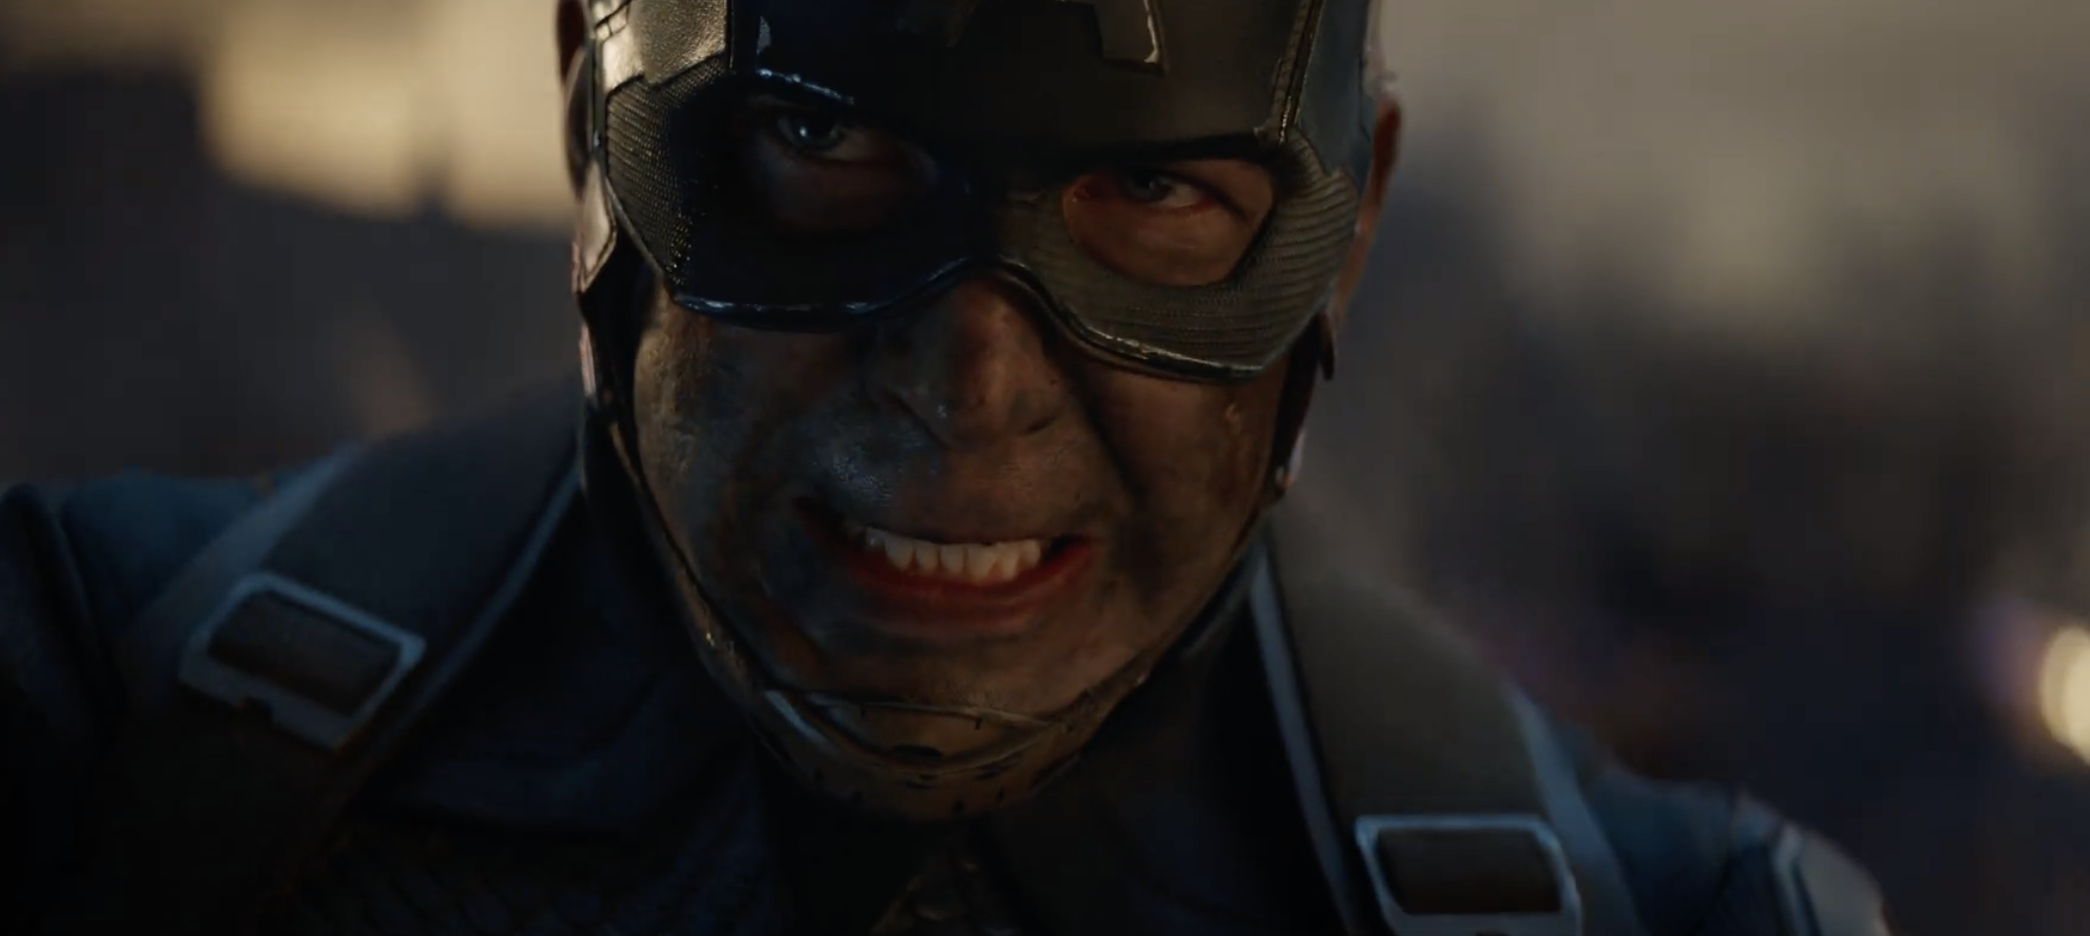 See The NEW Avengers: Endgame Trailer Now!